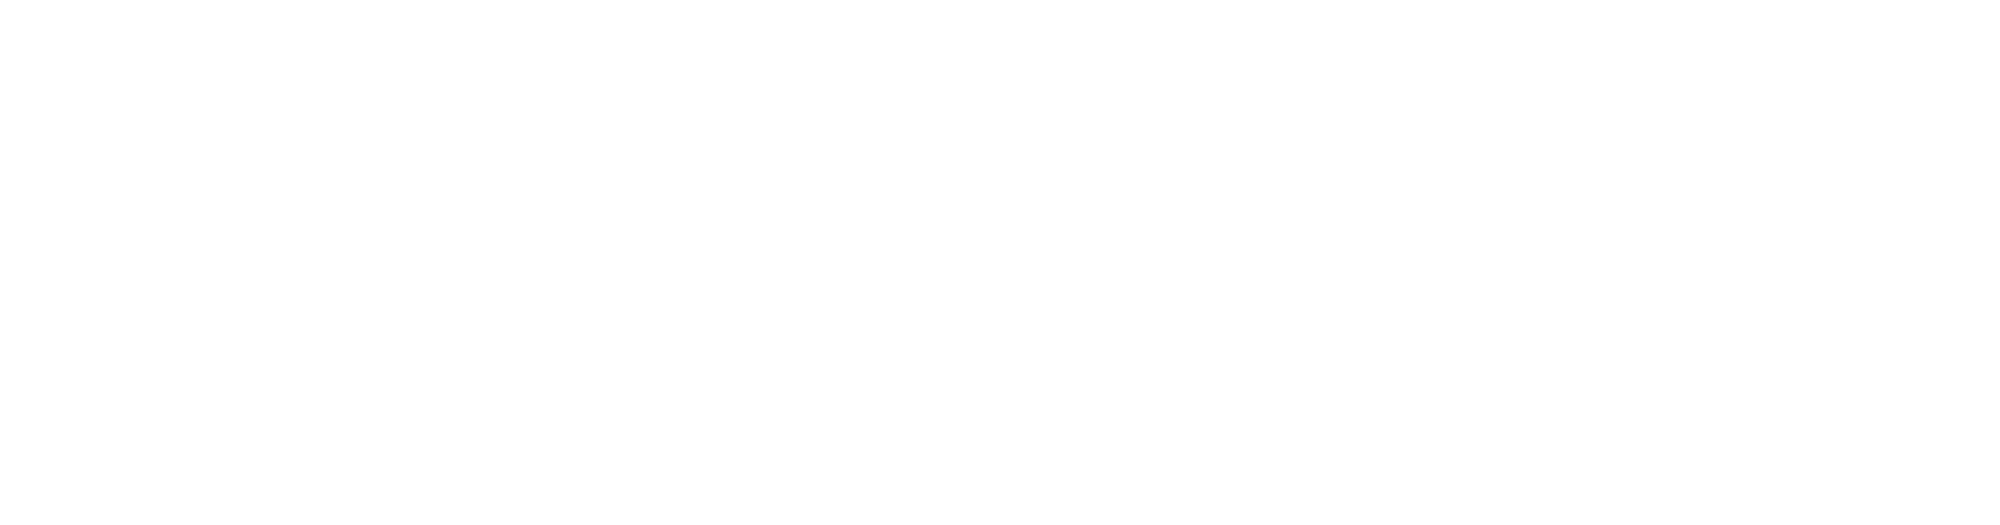 NetSuite <br>
Accountant Program